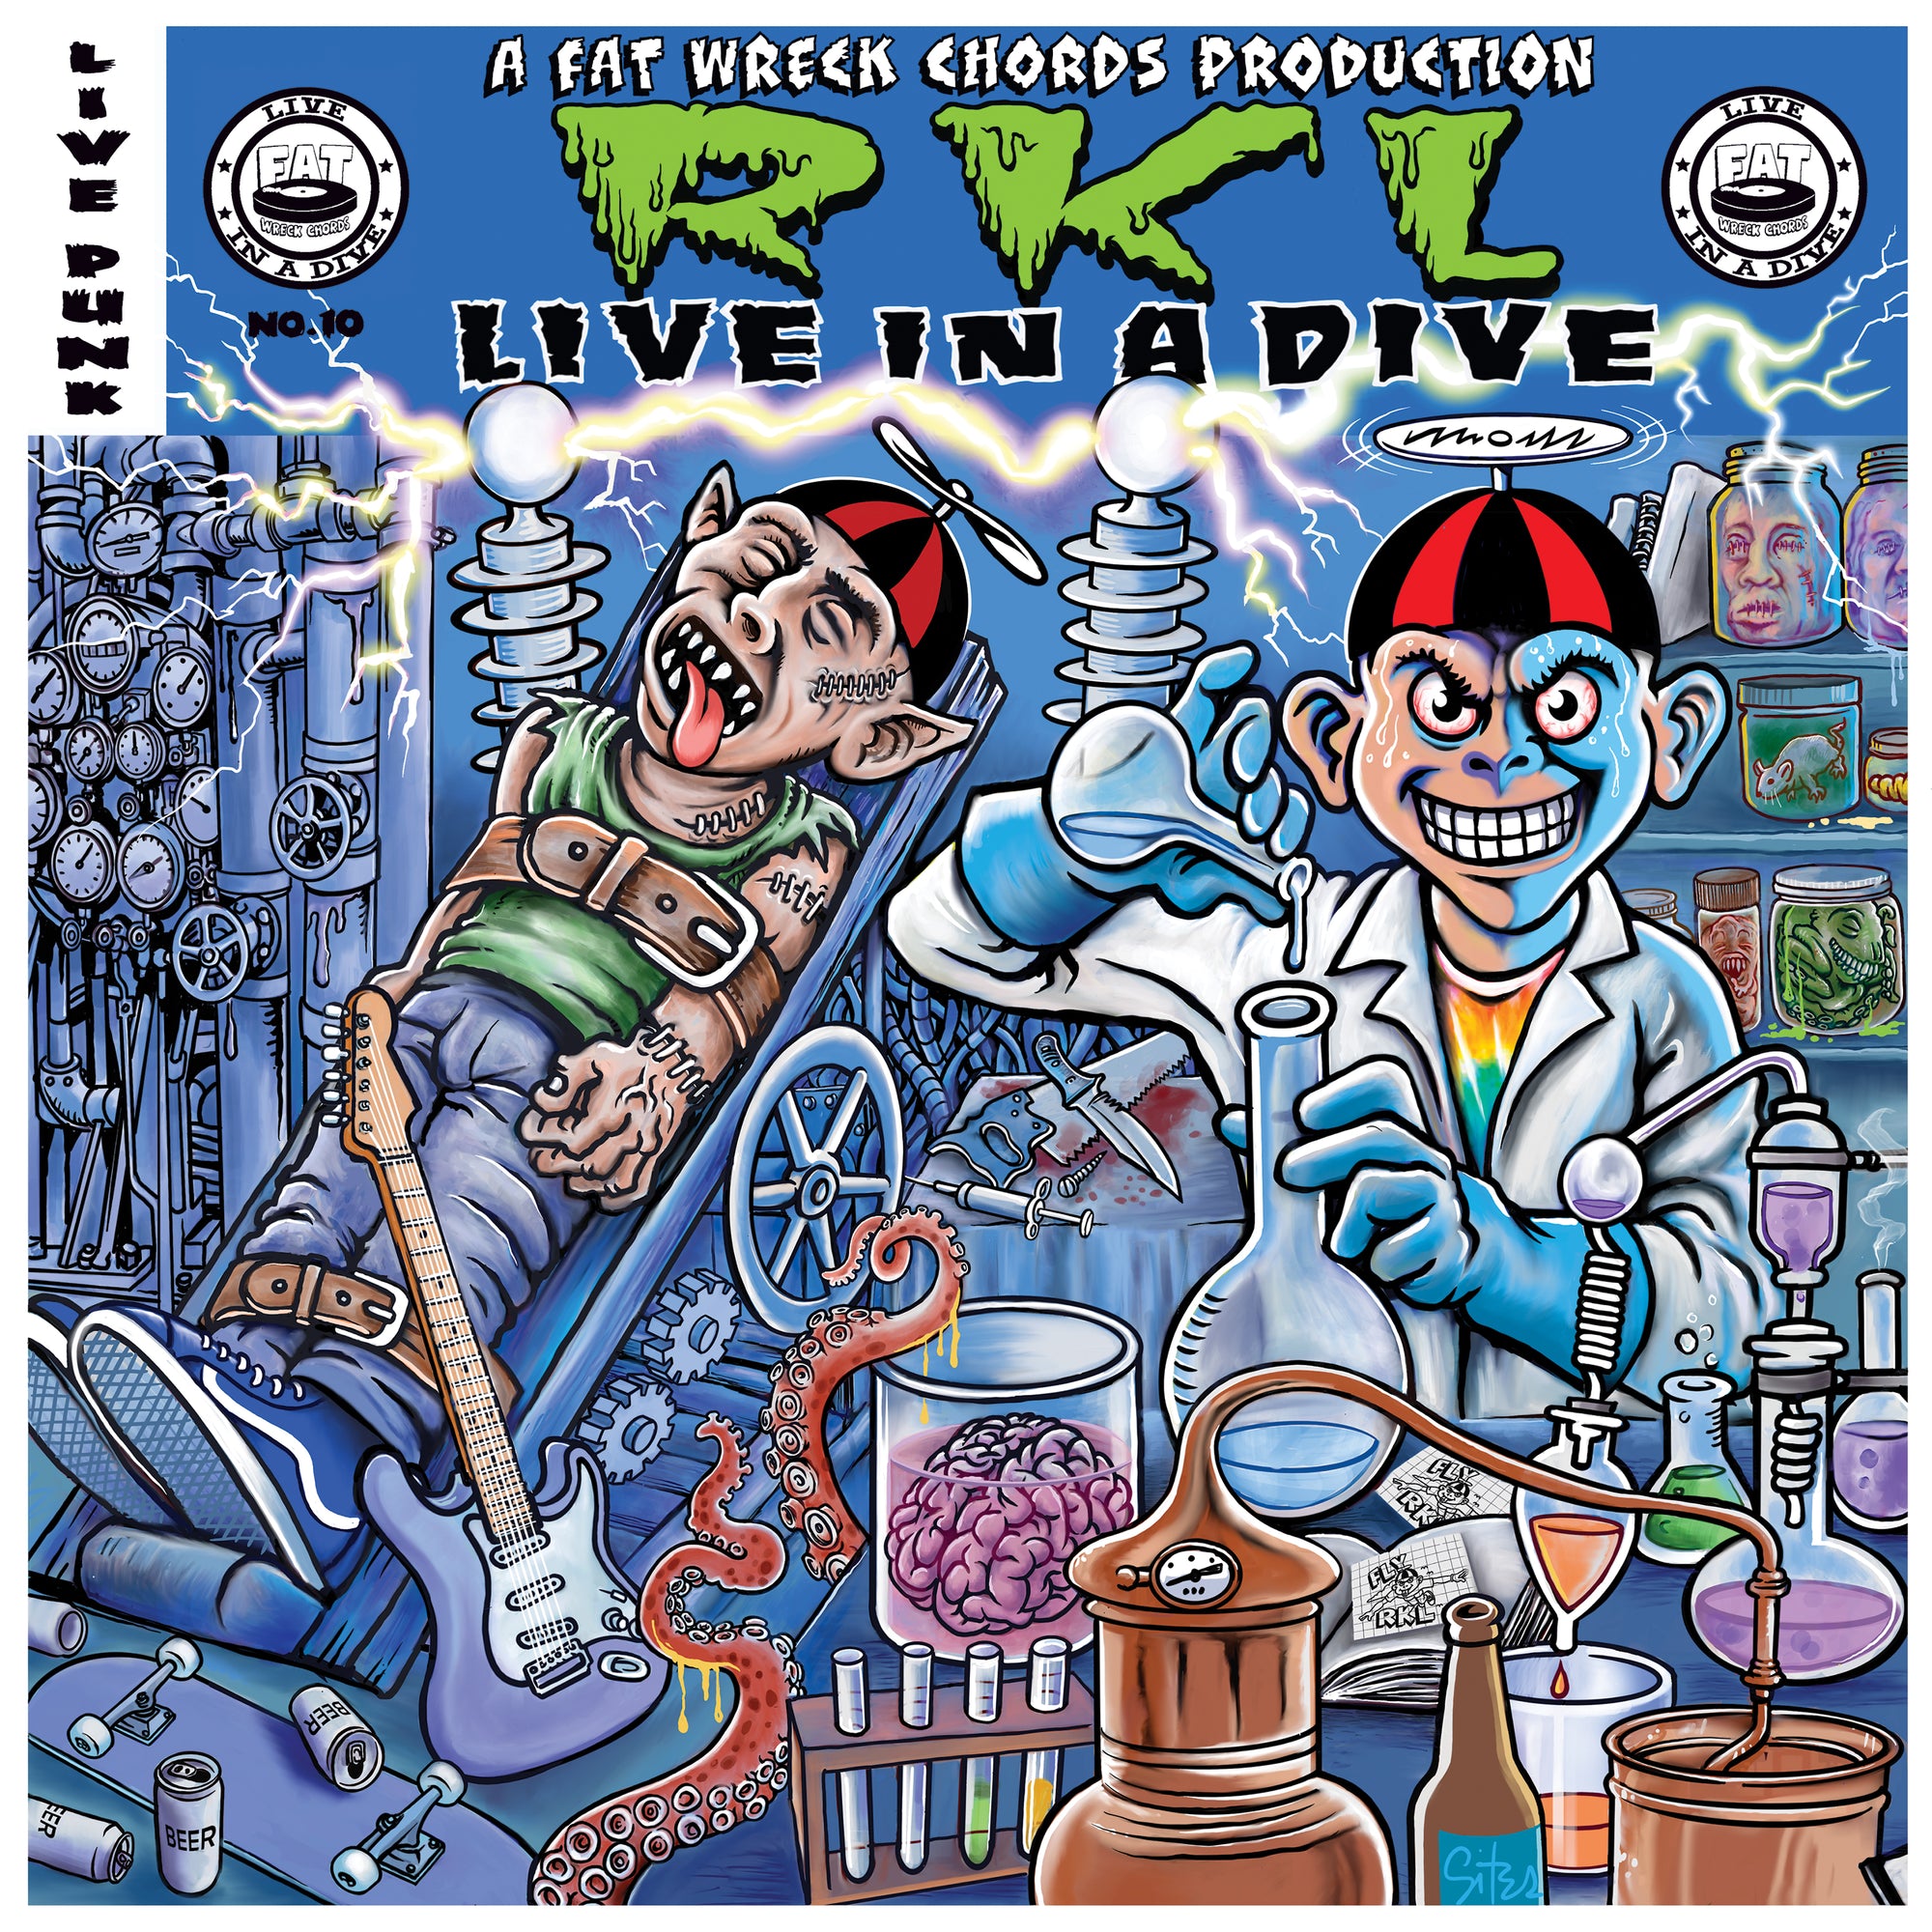 Live in a Dive: RKL